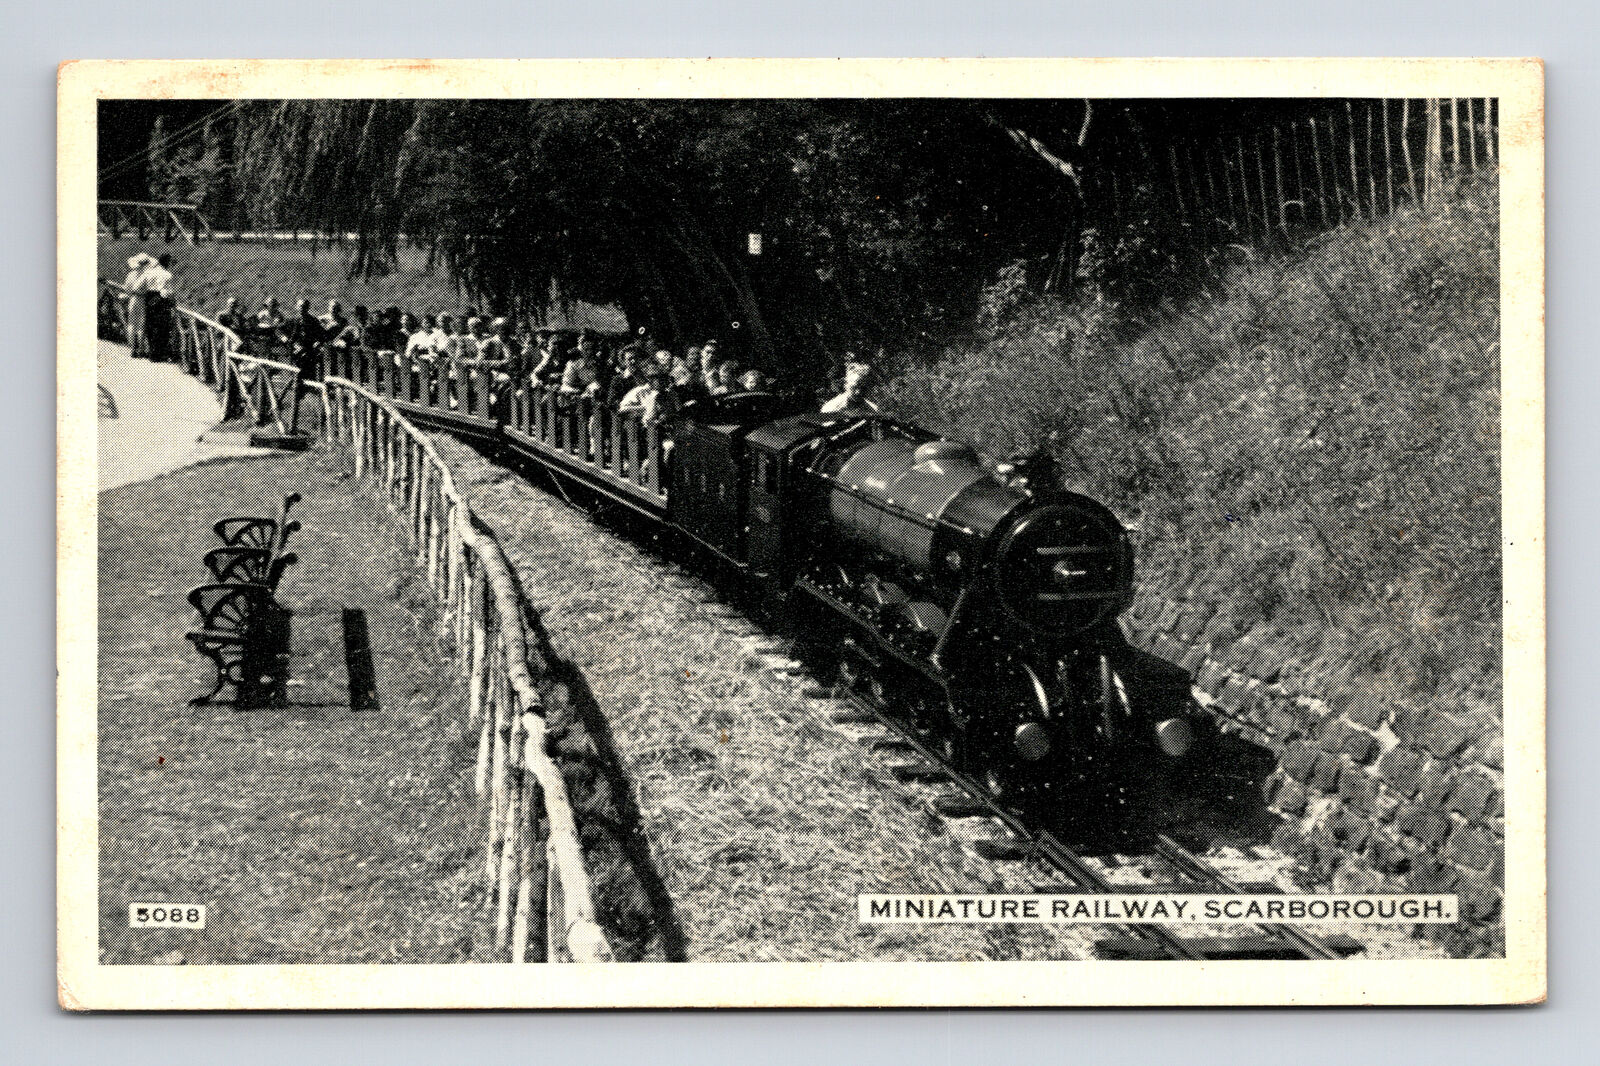 c1961 Miniature Railwayu Tourist Train Scarborough Postcard